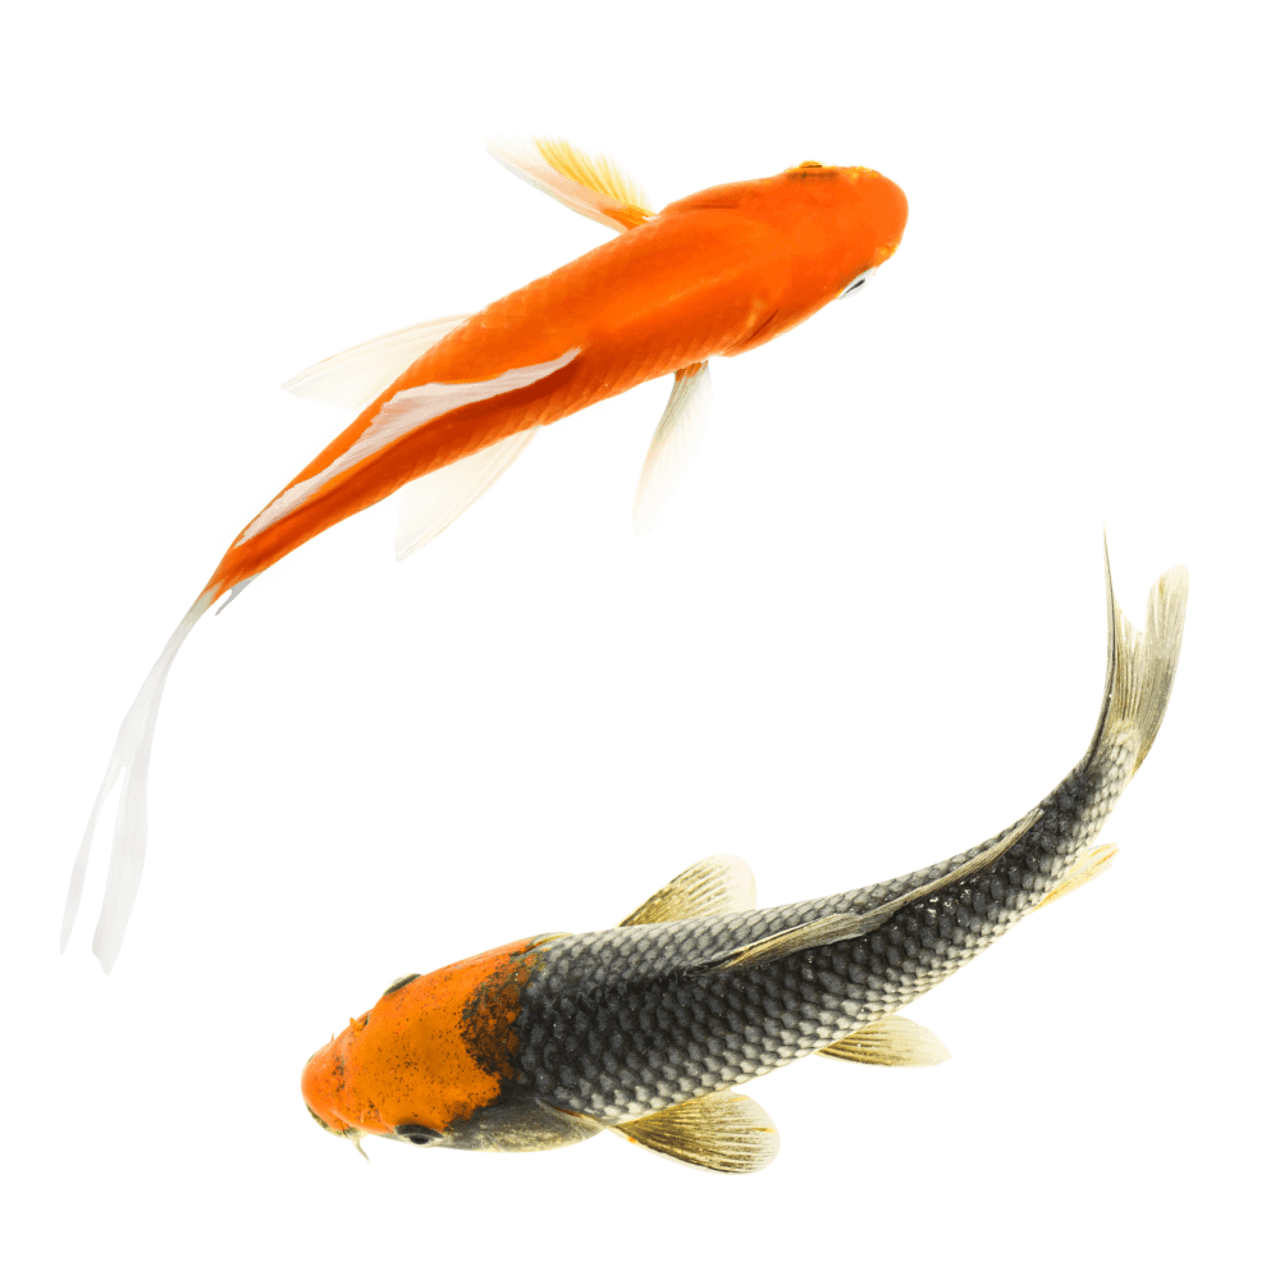 Two Koi fish swimming in a circle